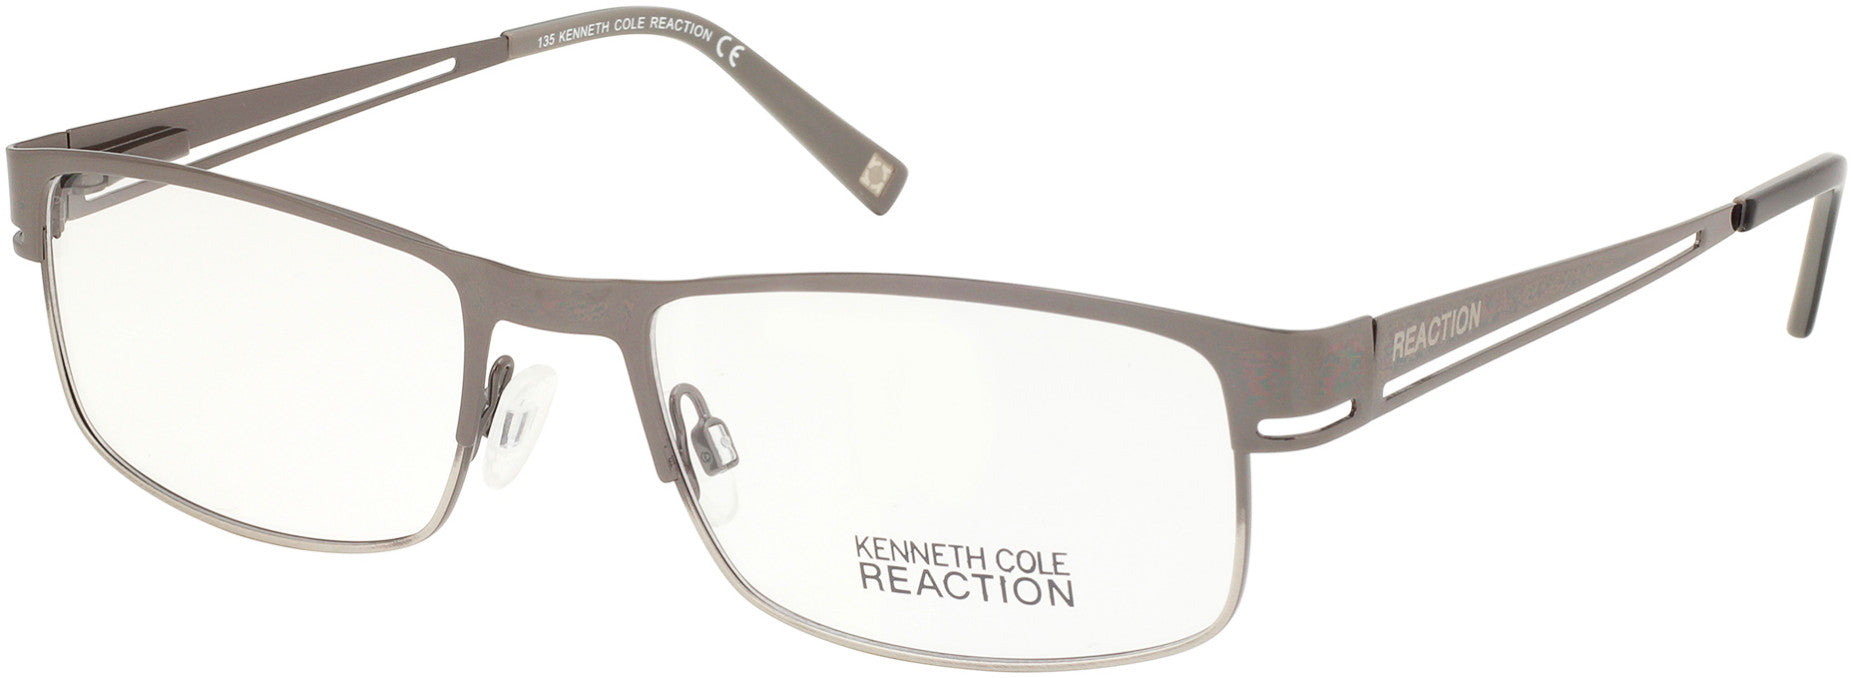 Kenneth Cole New York,Kenneth Cole Reaction KC0697 Eyeglasses 009-009 - Matte Gunmetal